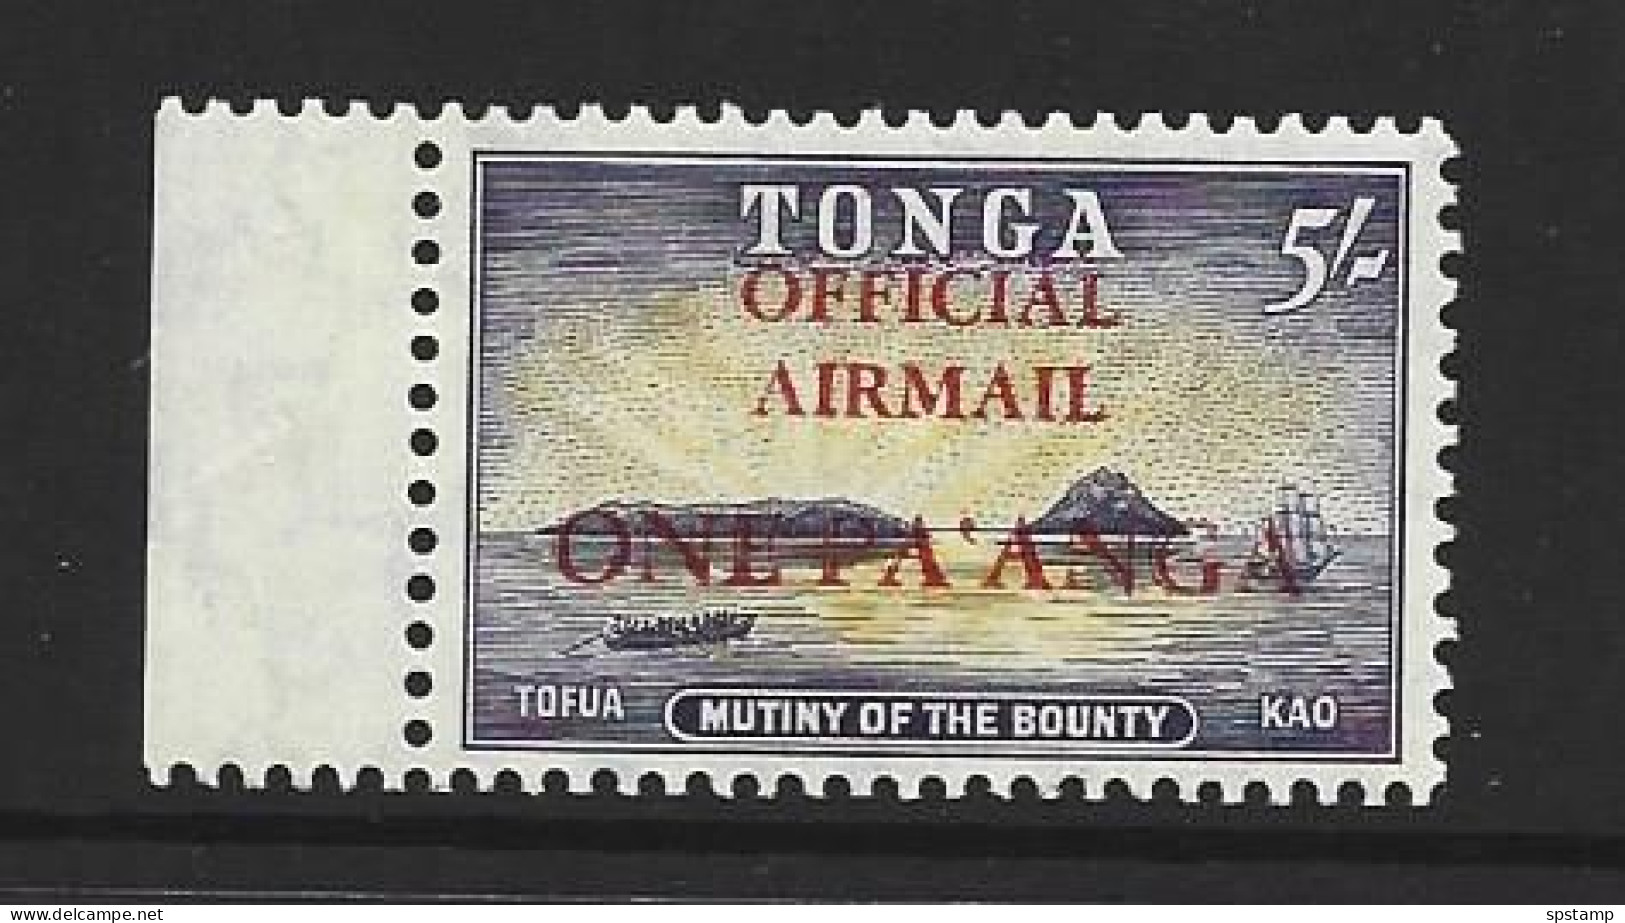 Tonga 1967 1 Pa. Official Airmail Overprint On 5/- Definitive MLH - Tonga (...-1970)